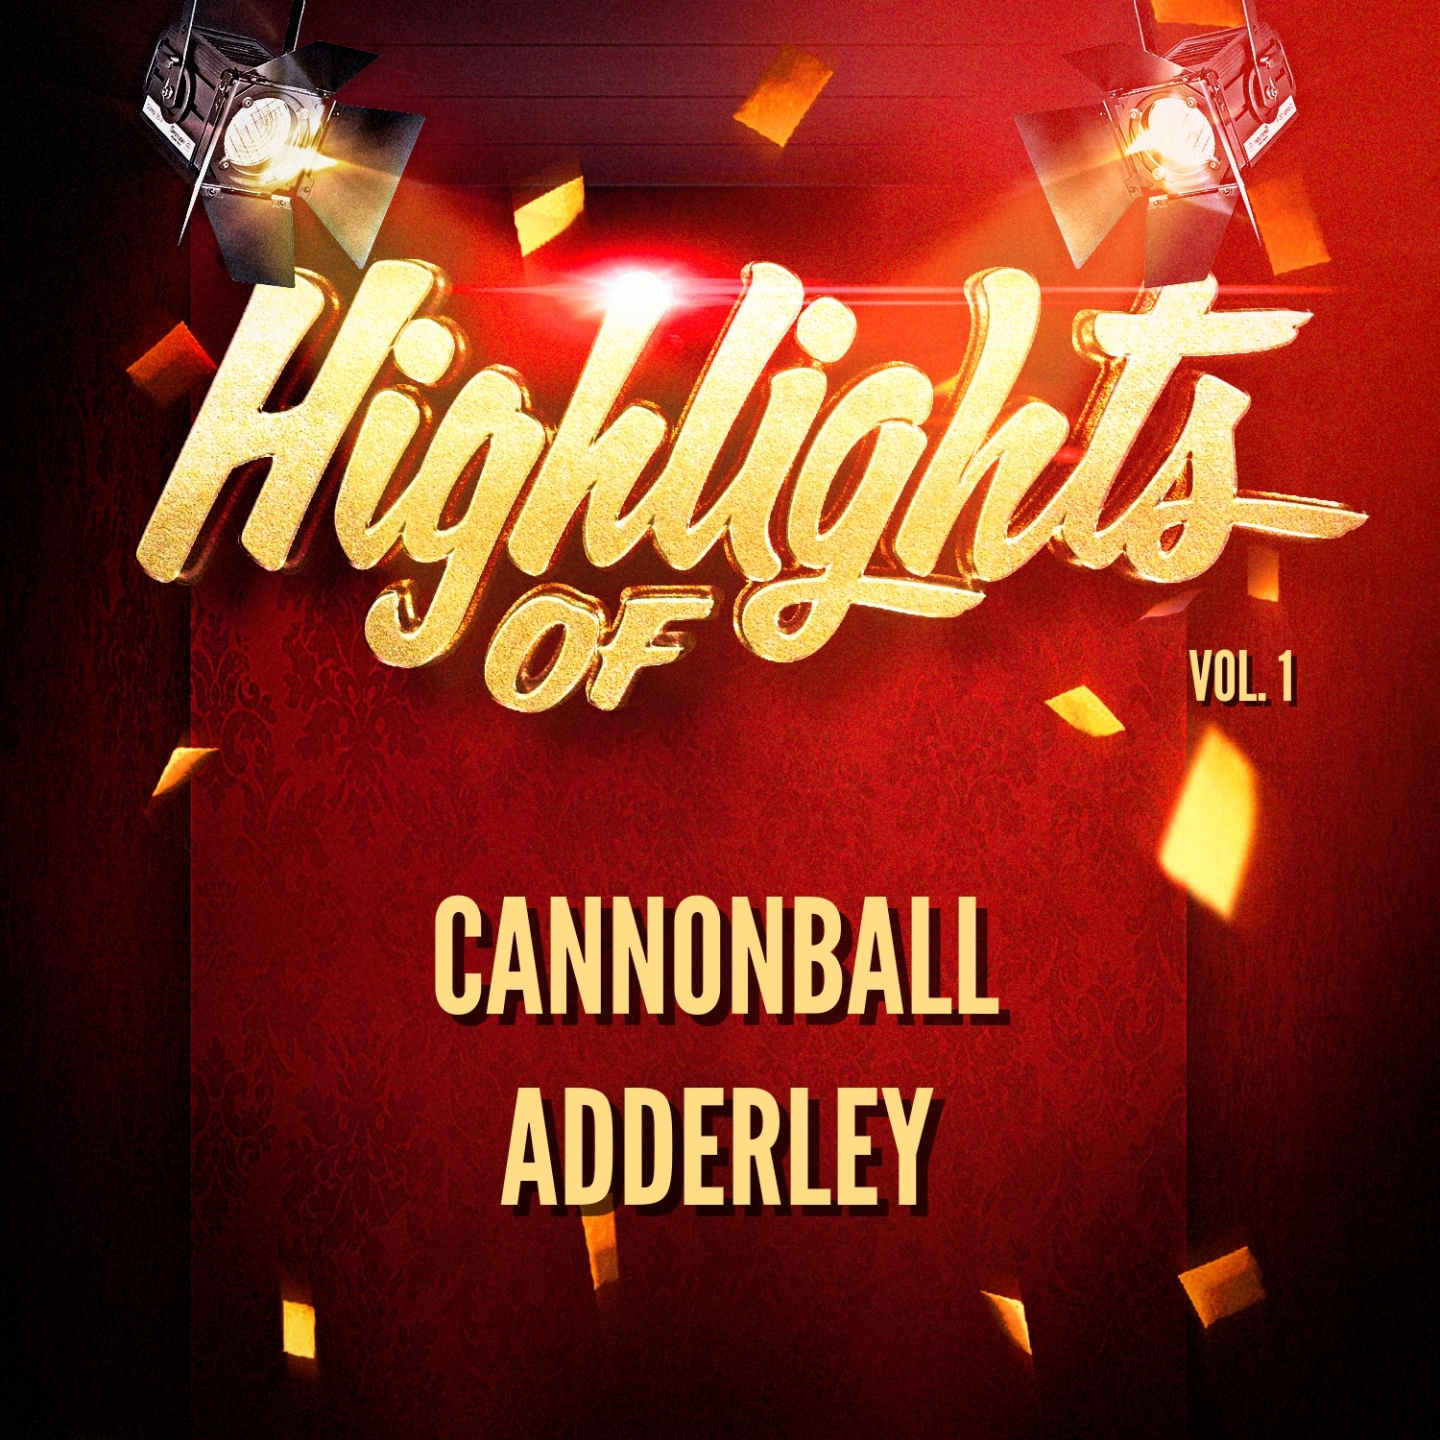 Highlights of Cannonball Adderley, Vol. 1